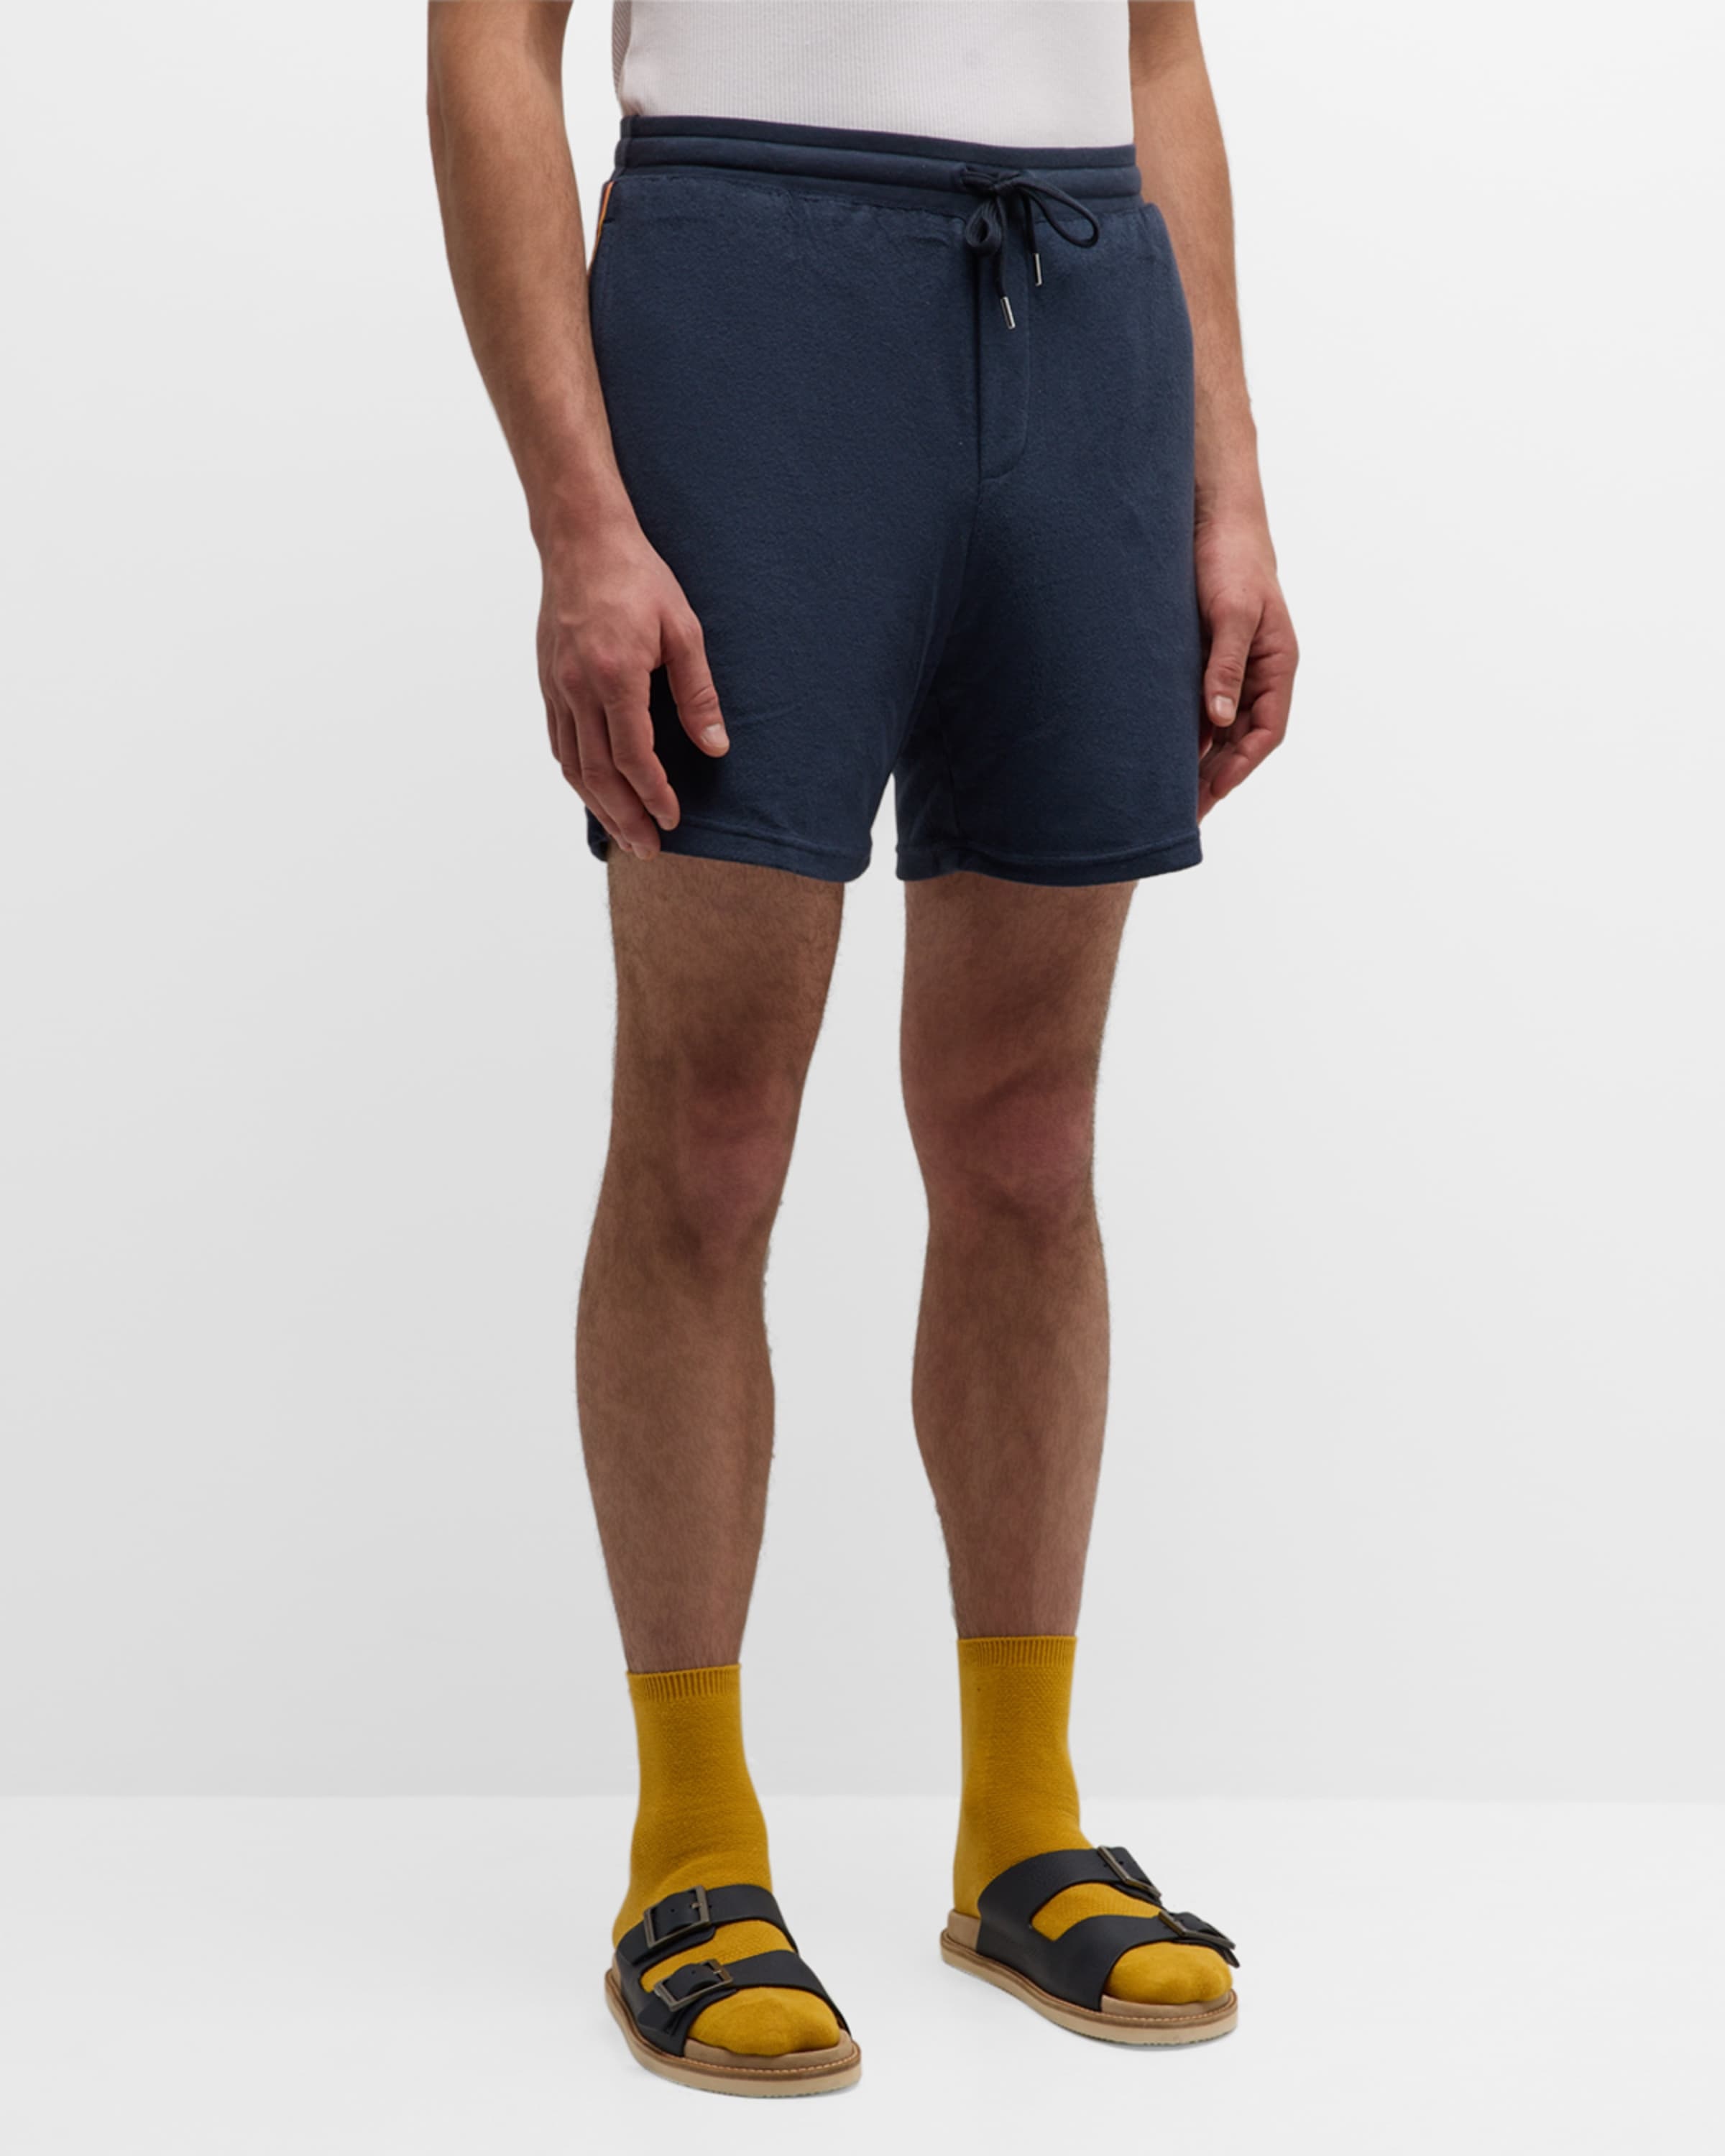 Men's Toweling Side-Stripe Shorts - 2